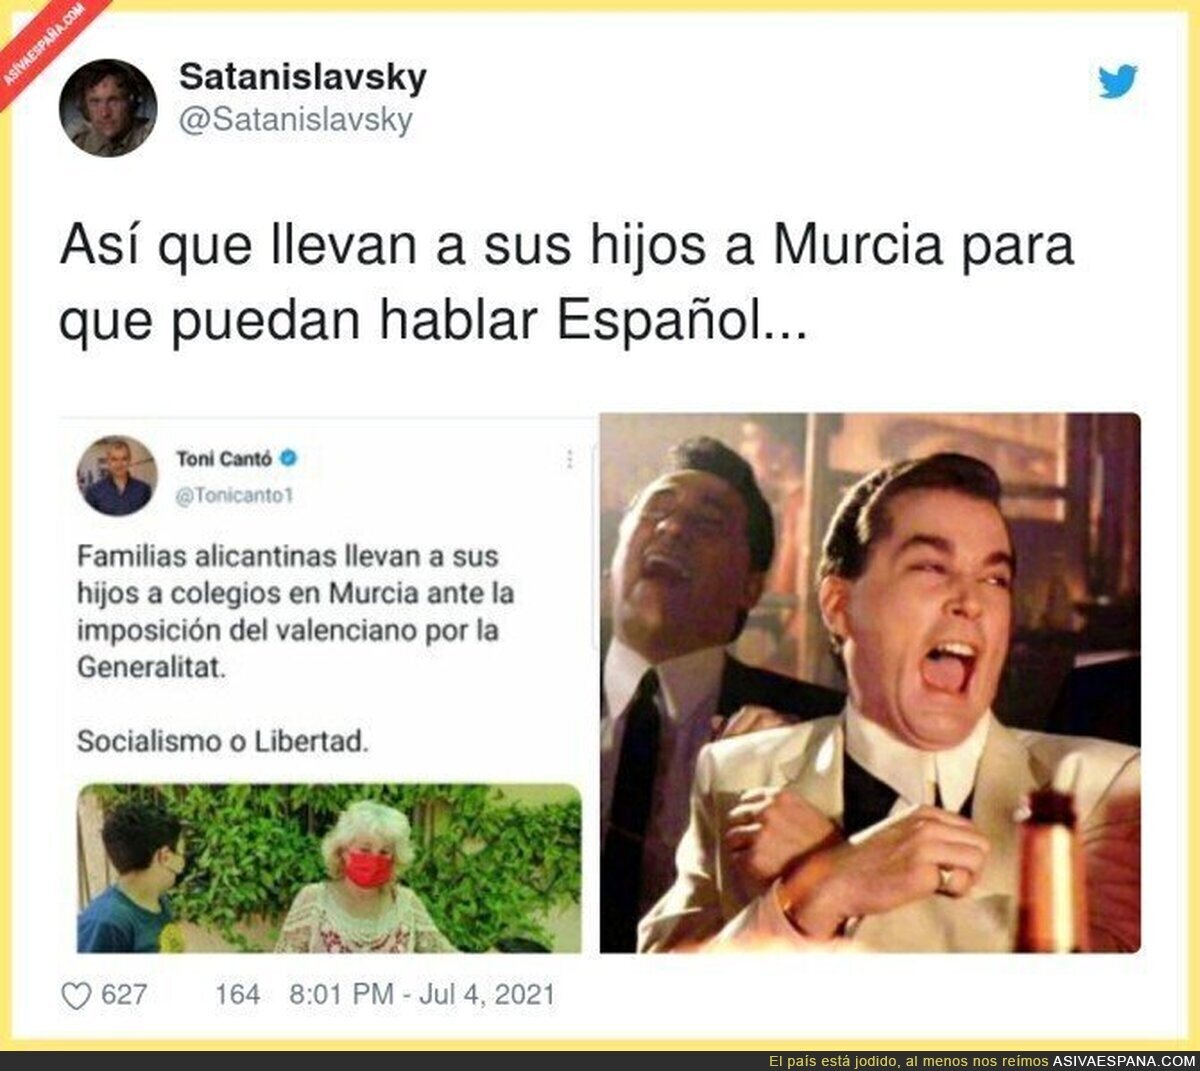 Español, en Murcia...